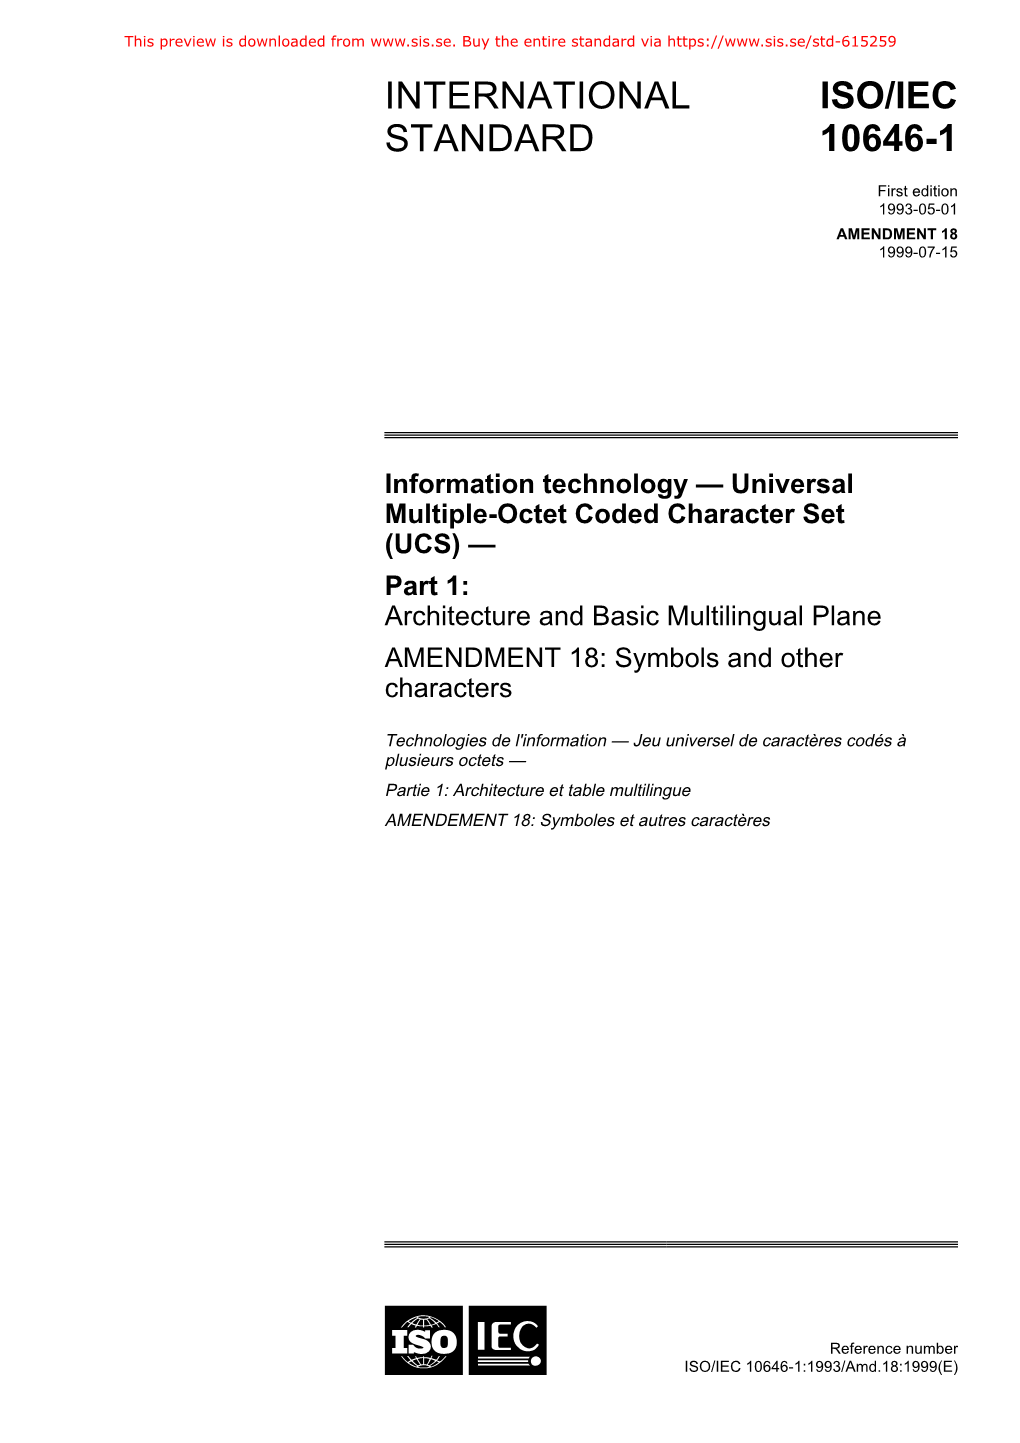 International Standard Iso/Iec 10646-1